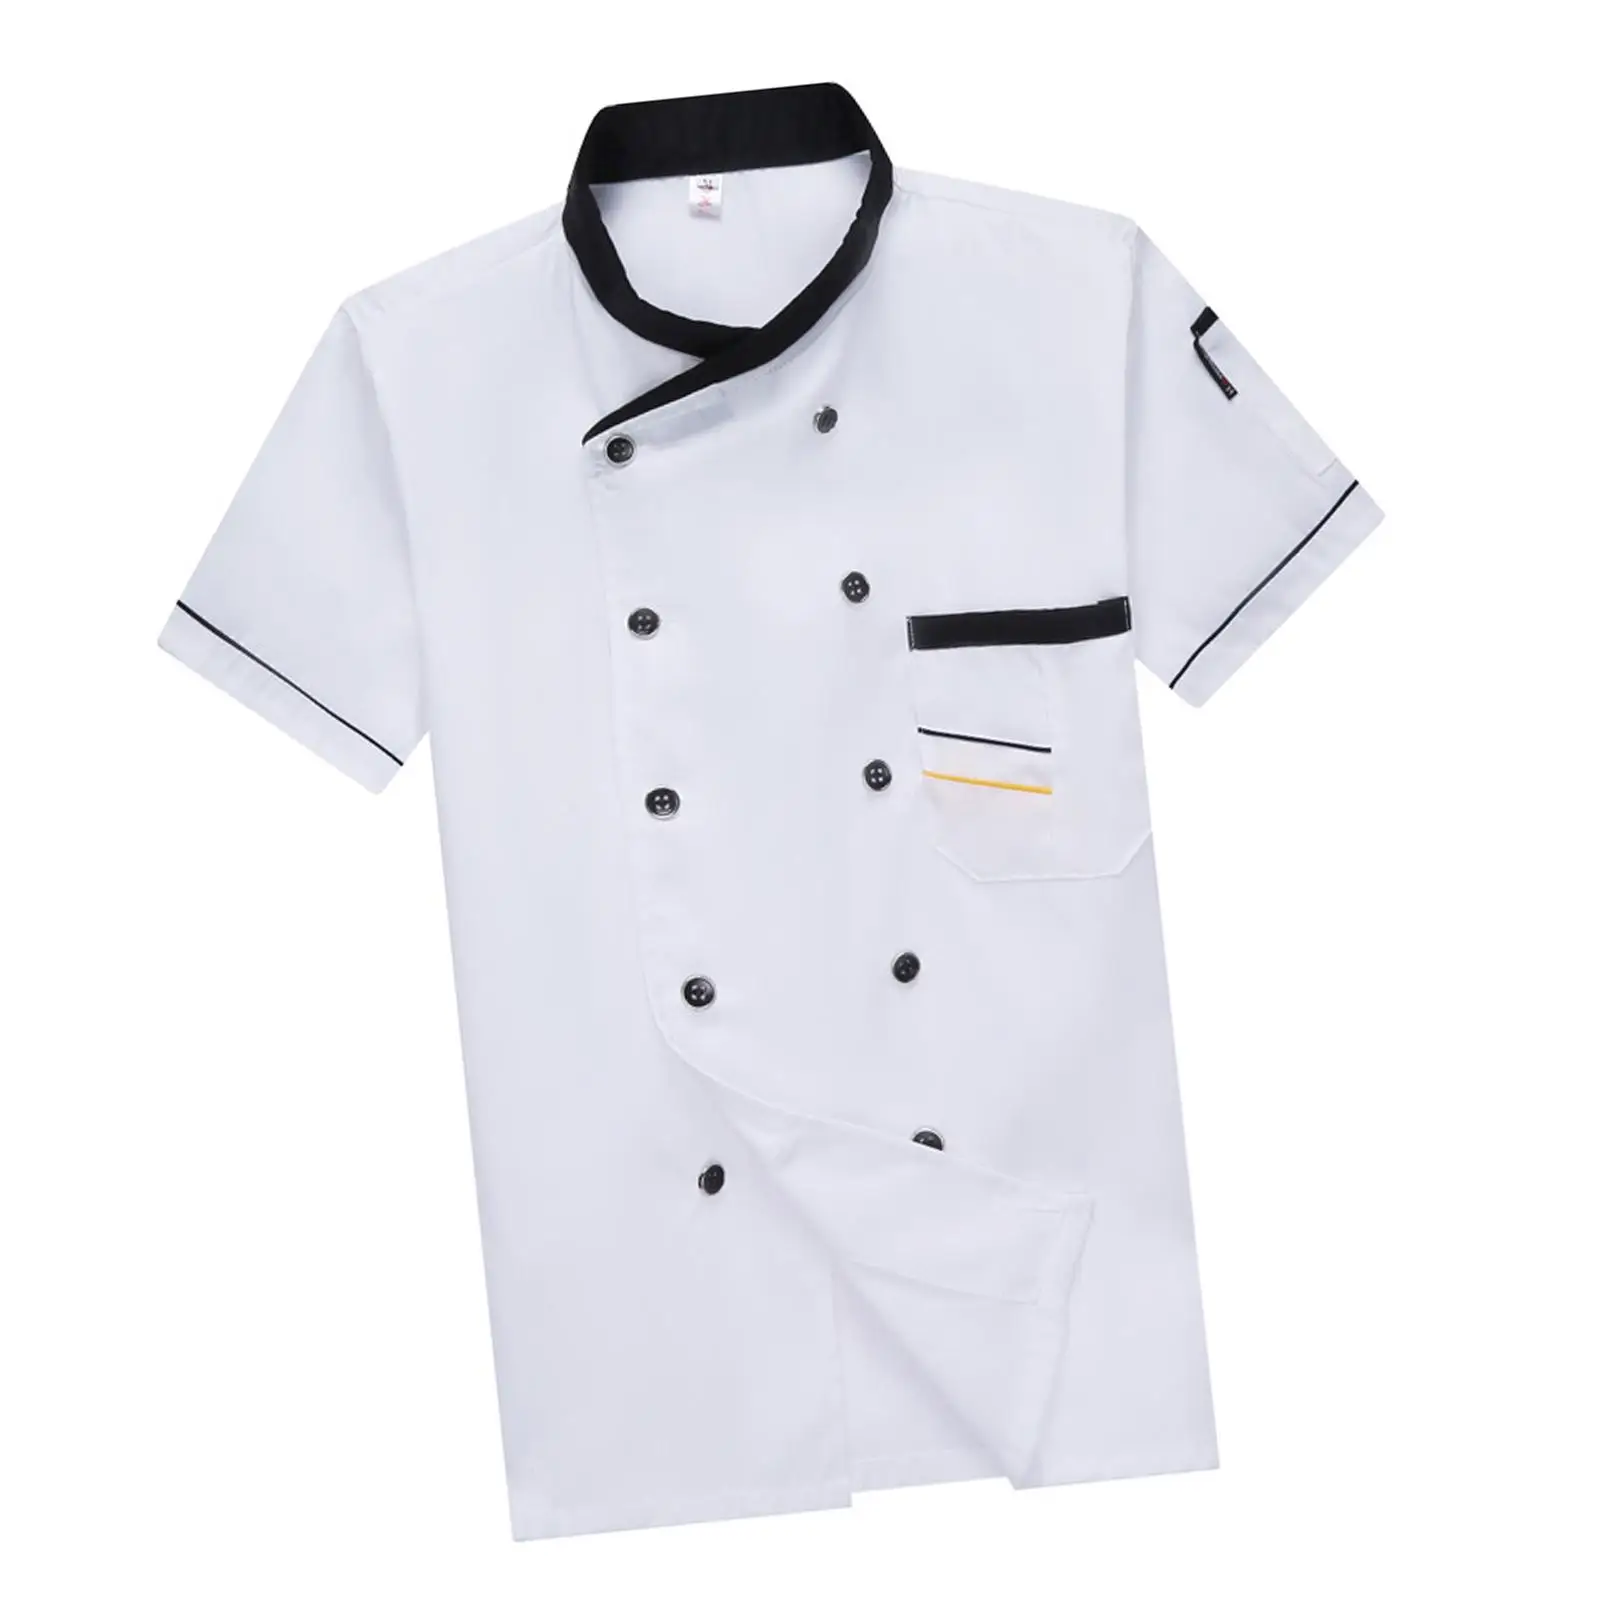 Chef Uniform Jacket, Waiter Waitress Coat Shirt, Breathable Men Women Work Wear Clothes for Hotel Restaurant Cooking Cafe